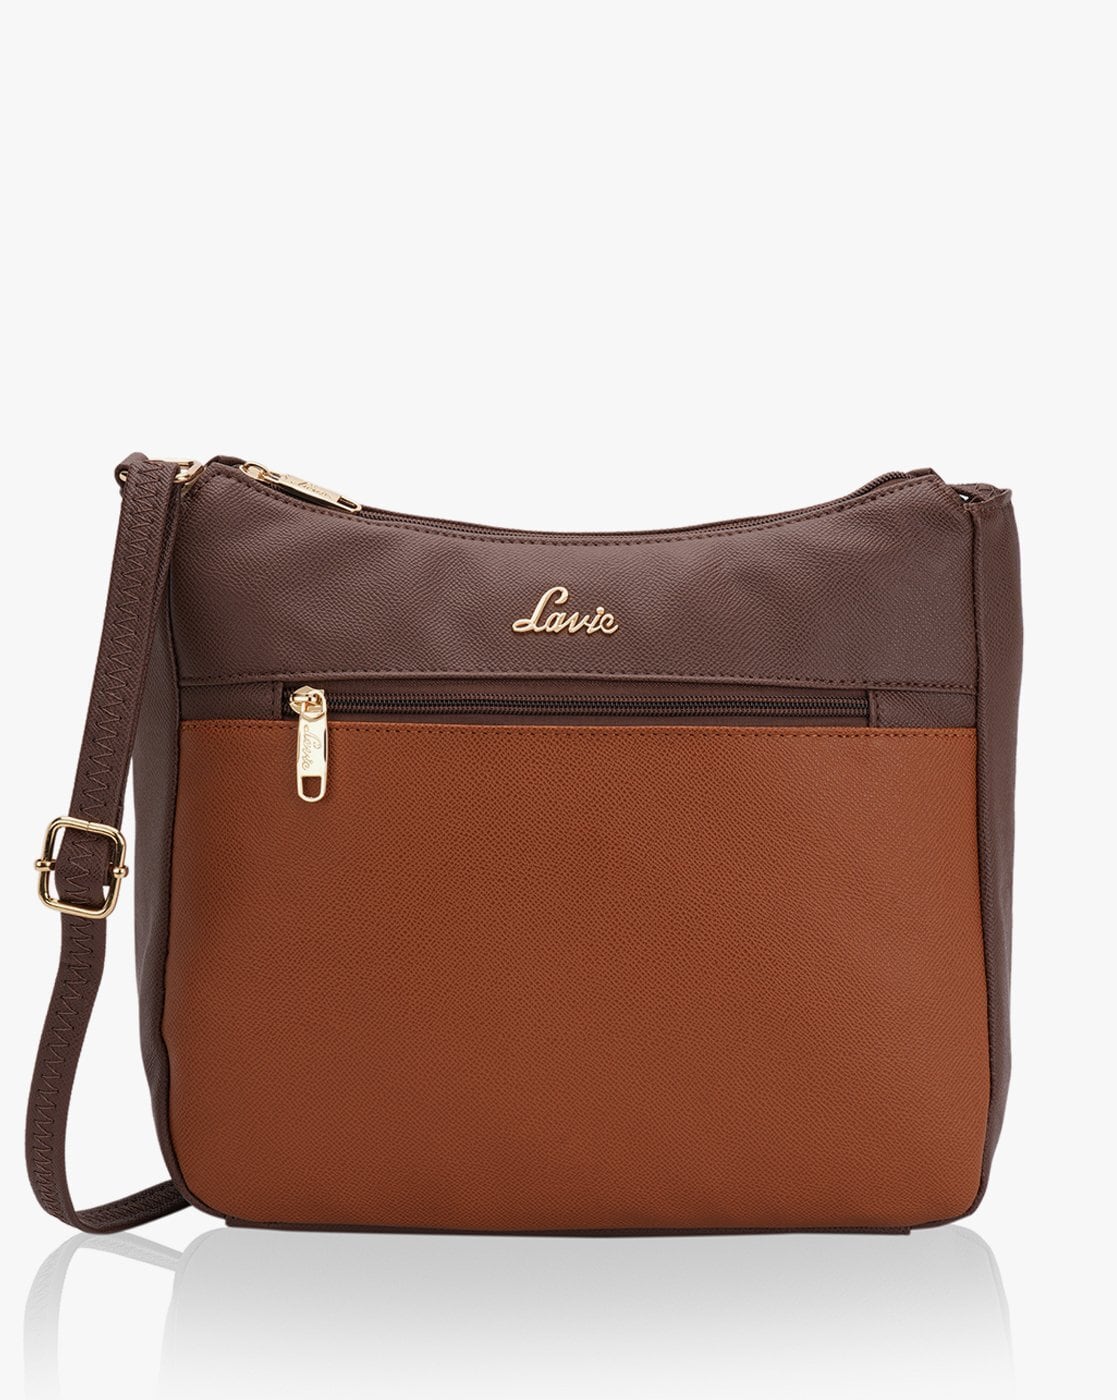 Lavie Bags - Buy Lavie Bags Online for Women & Girls | Myntra